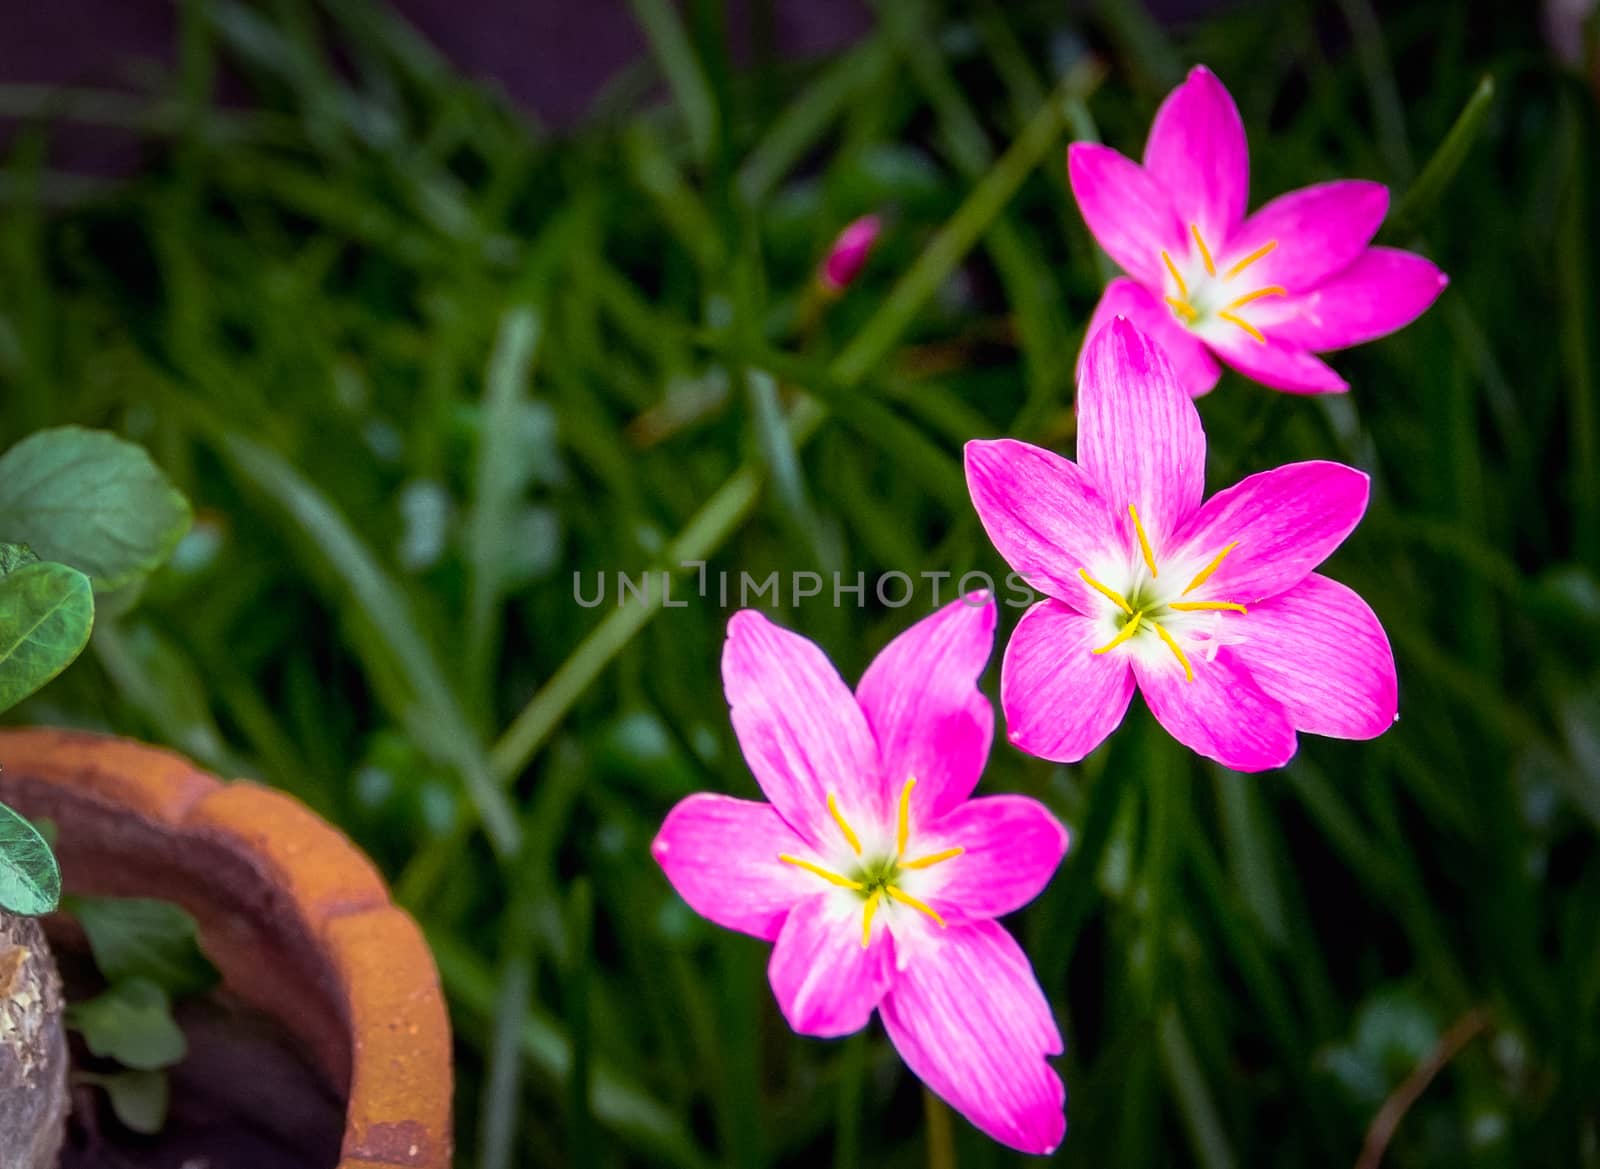 Closeup purple flower on blurry background